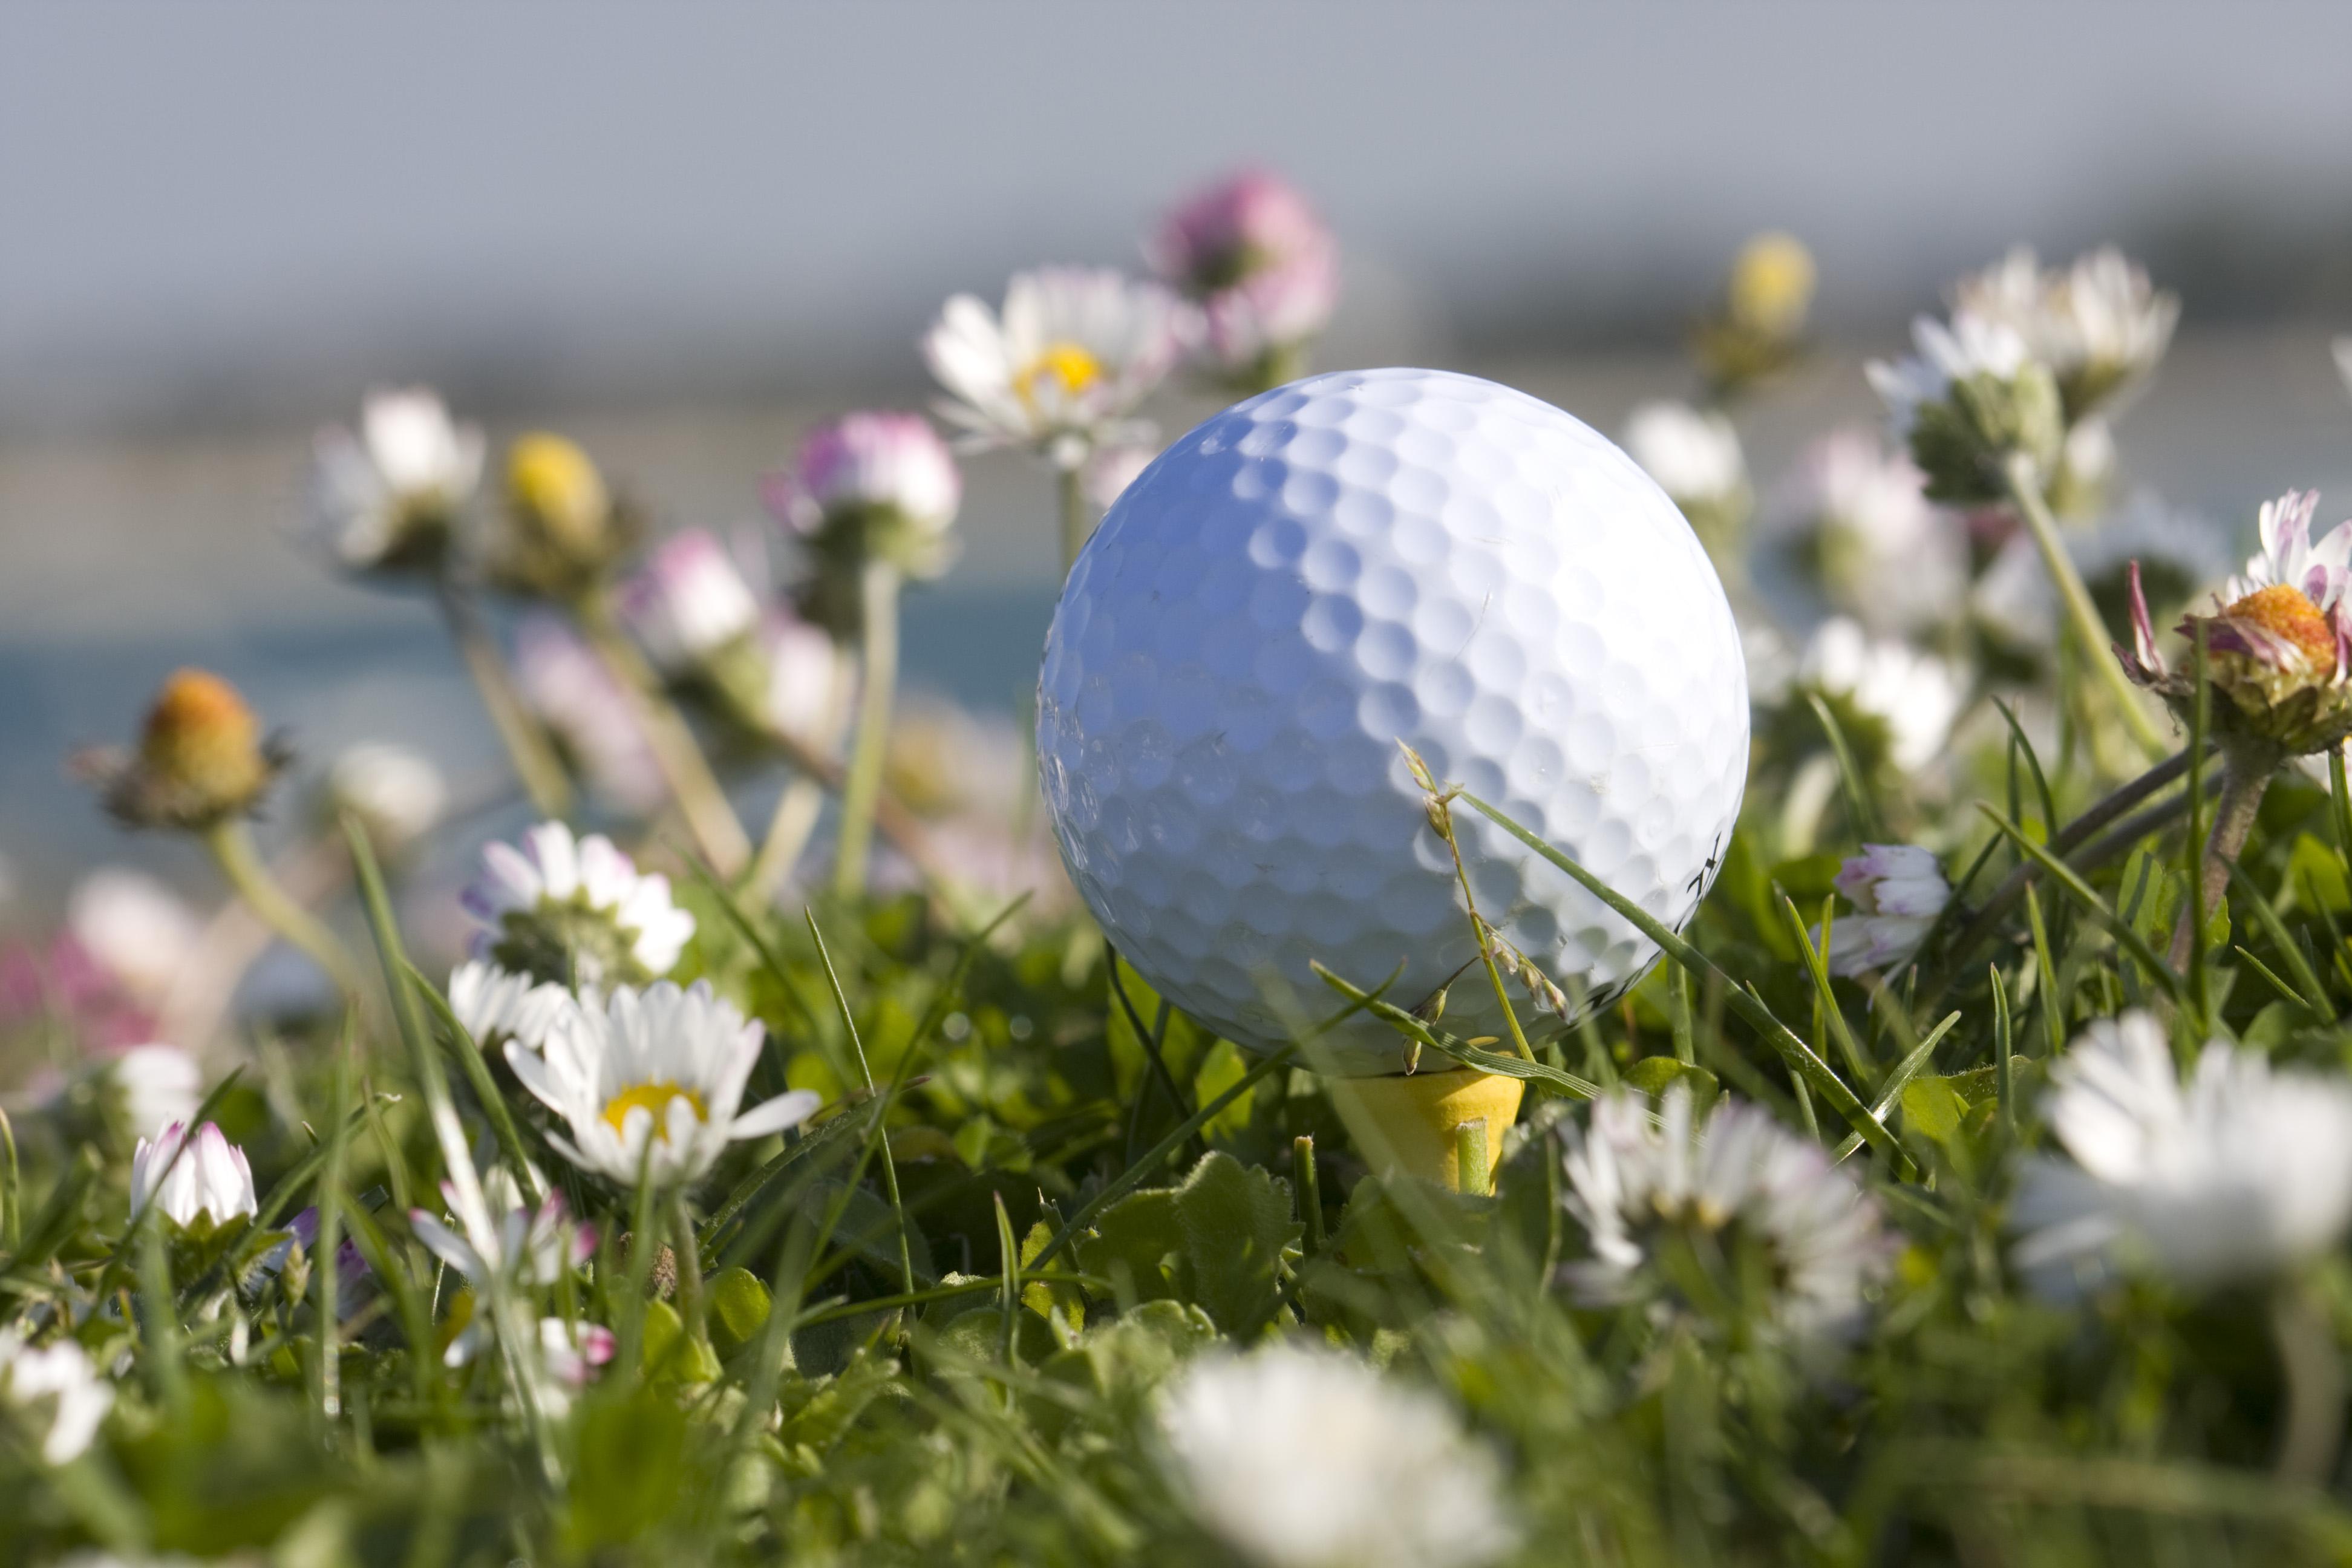 Spring Scramble Golf Tournament